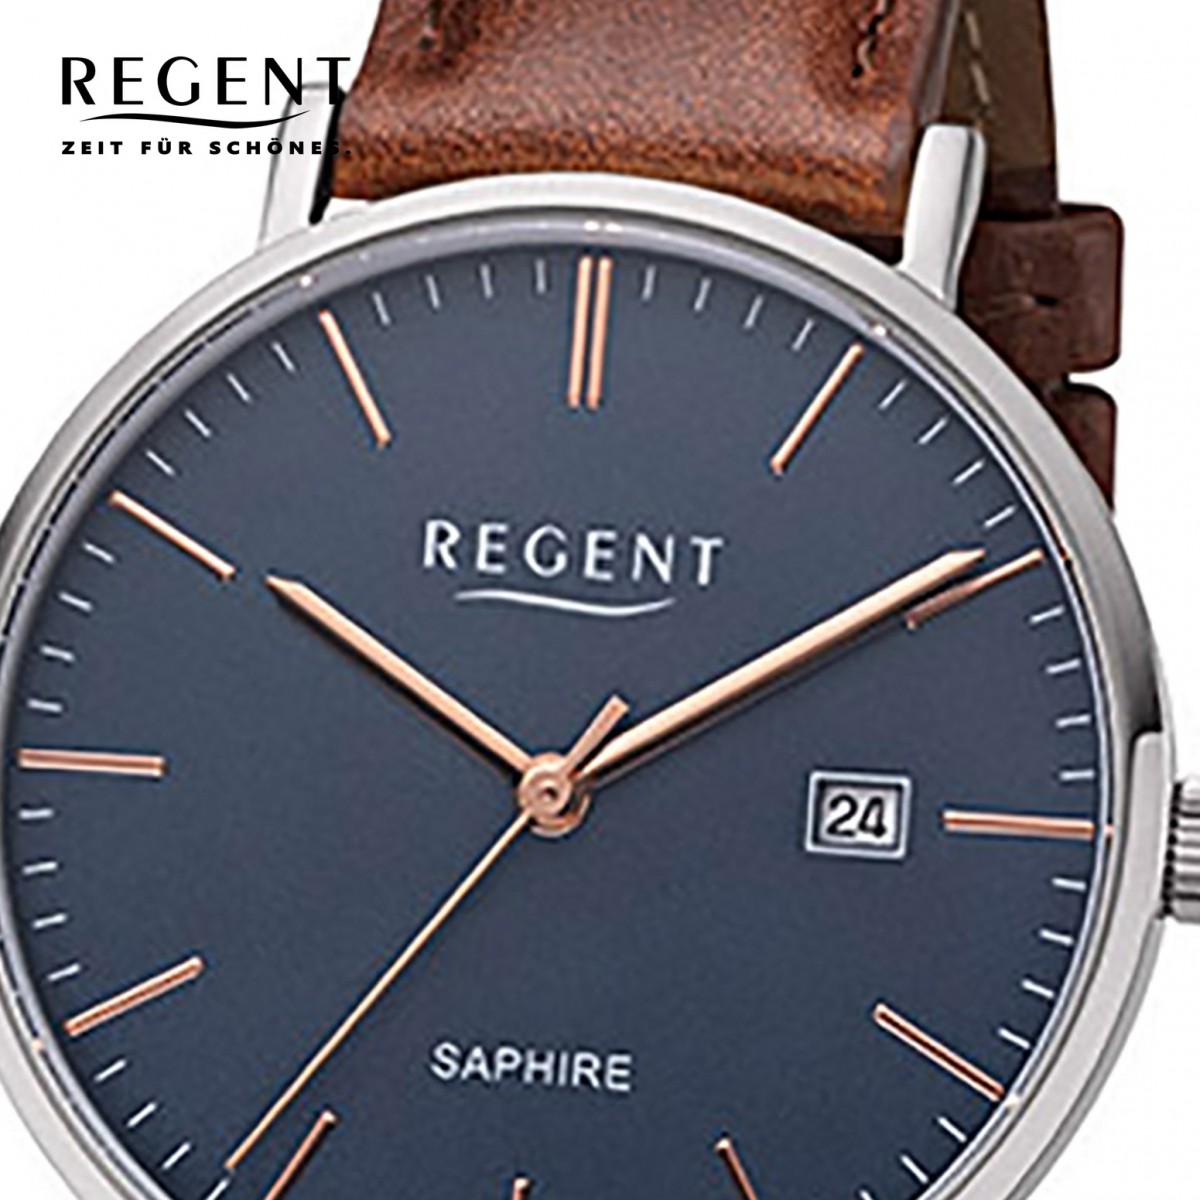 Regent Herren Analog F-1228 braun URF1228 Leder Armbanduhr Quarz-Uhr